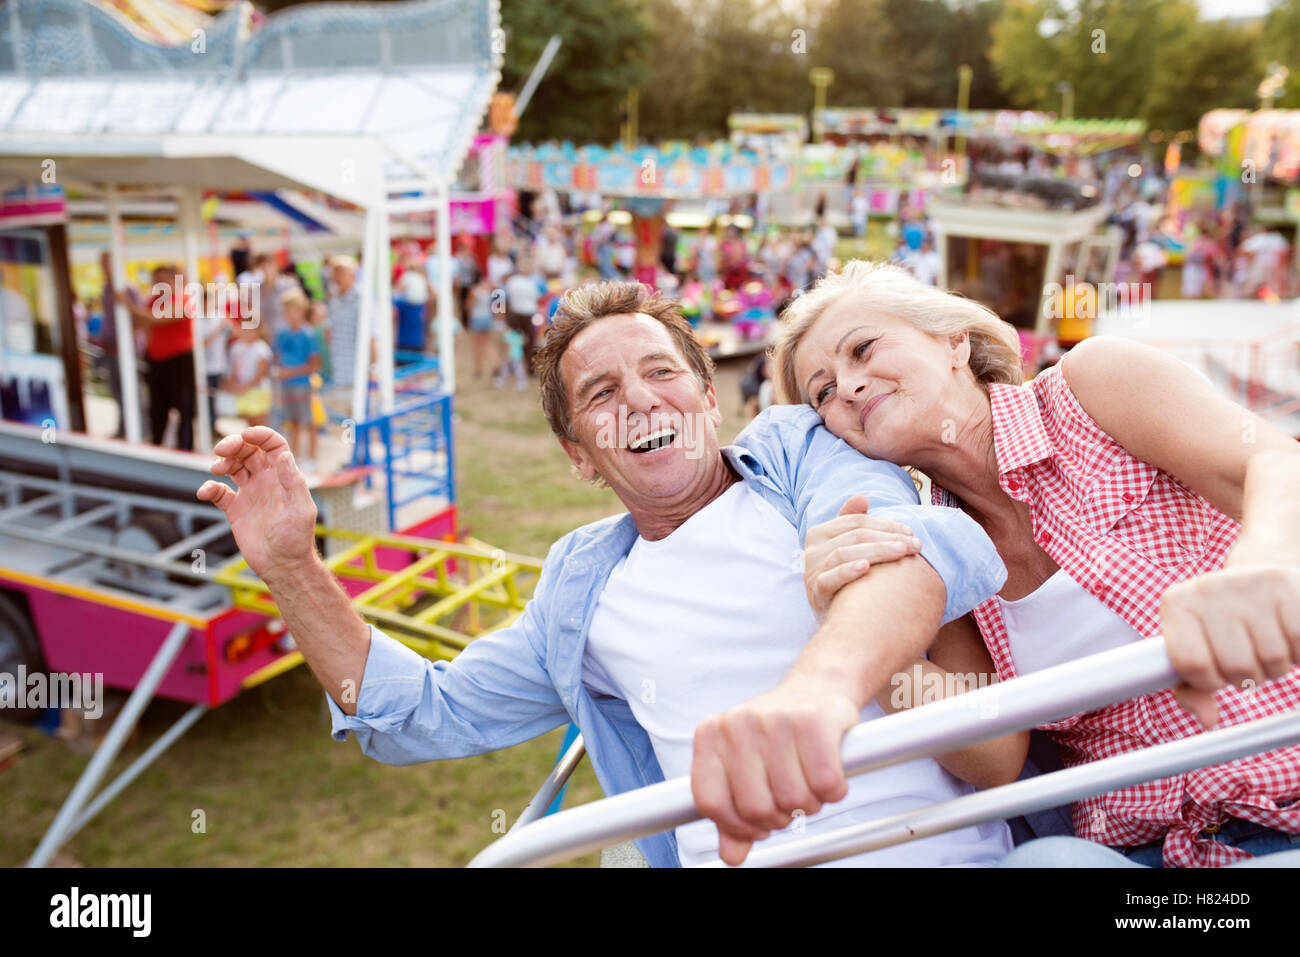 Senior couple on a ride in amusement park Stock Photo